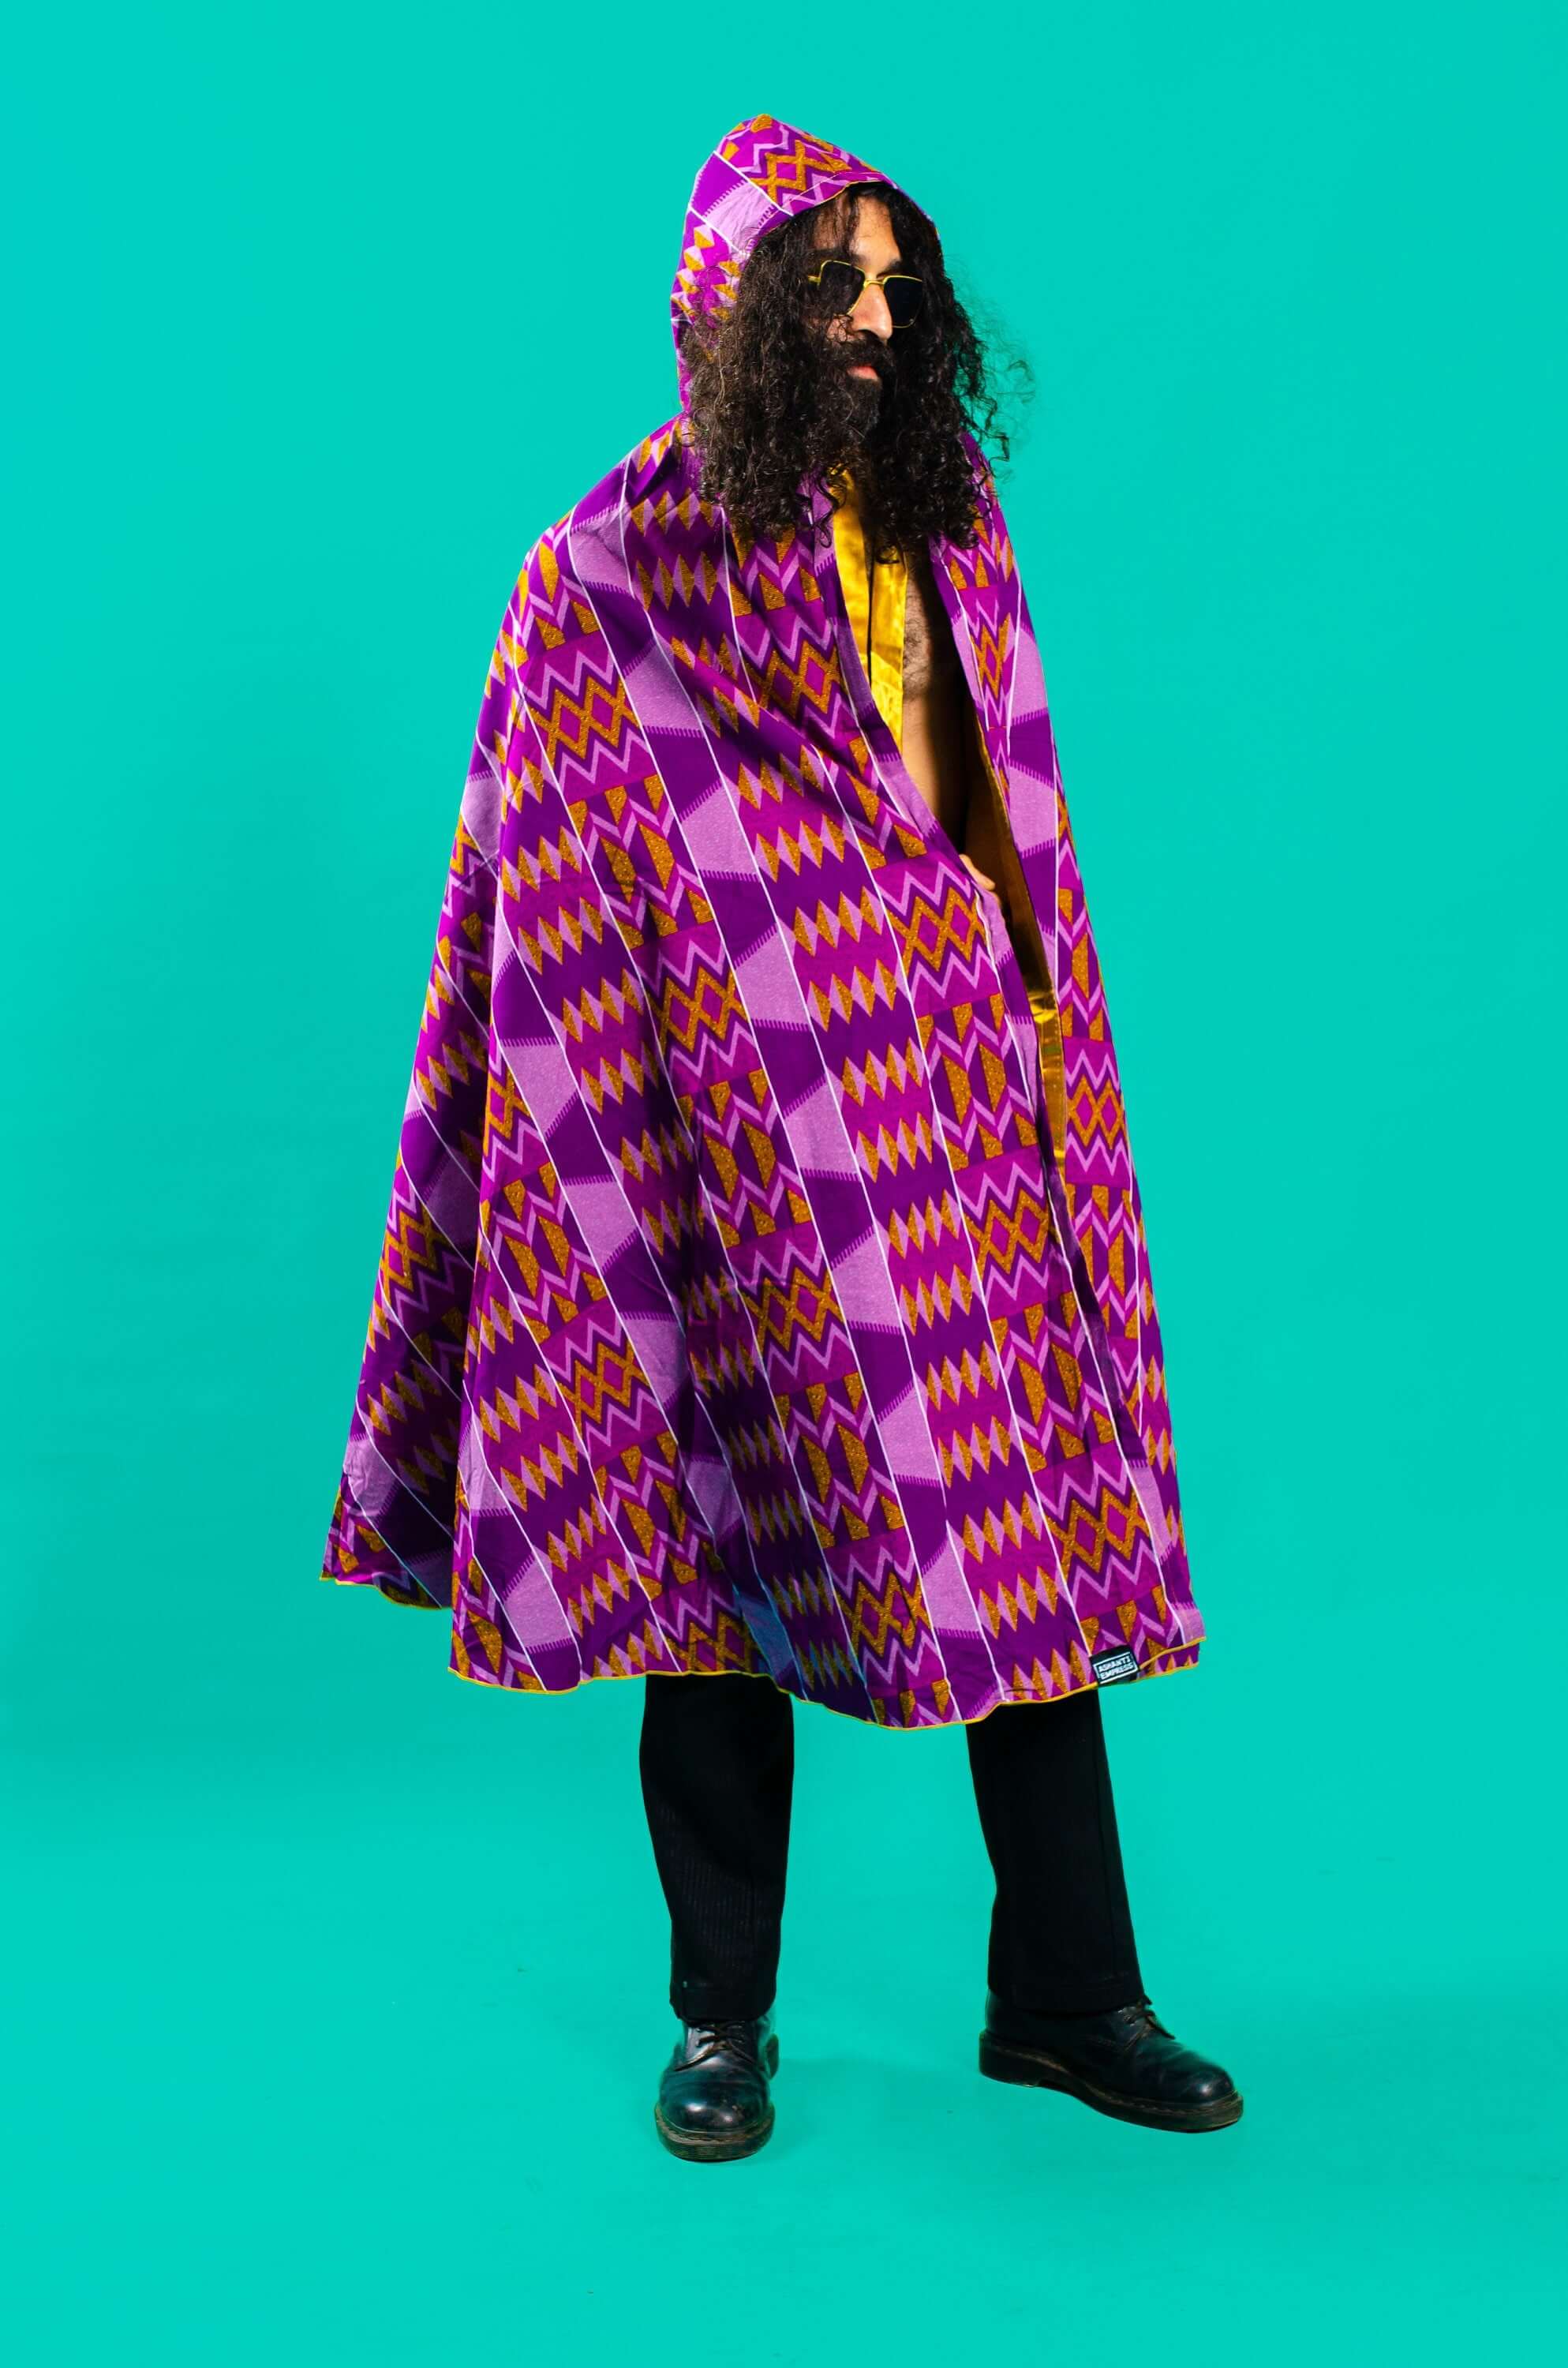 Purple Festival Cape, African Print Cloak, LGBTQ Pride Outfit, Reversible Afropunk Cape, Festival Outfit, Gold Silk Cape, Unisex Cloak